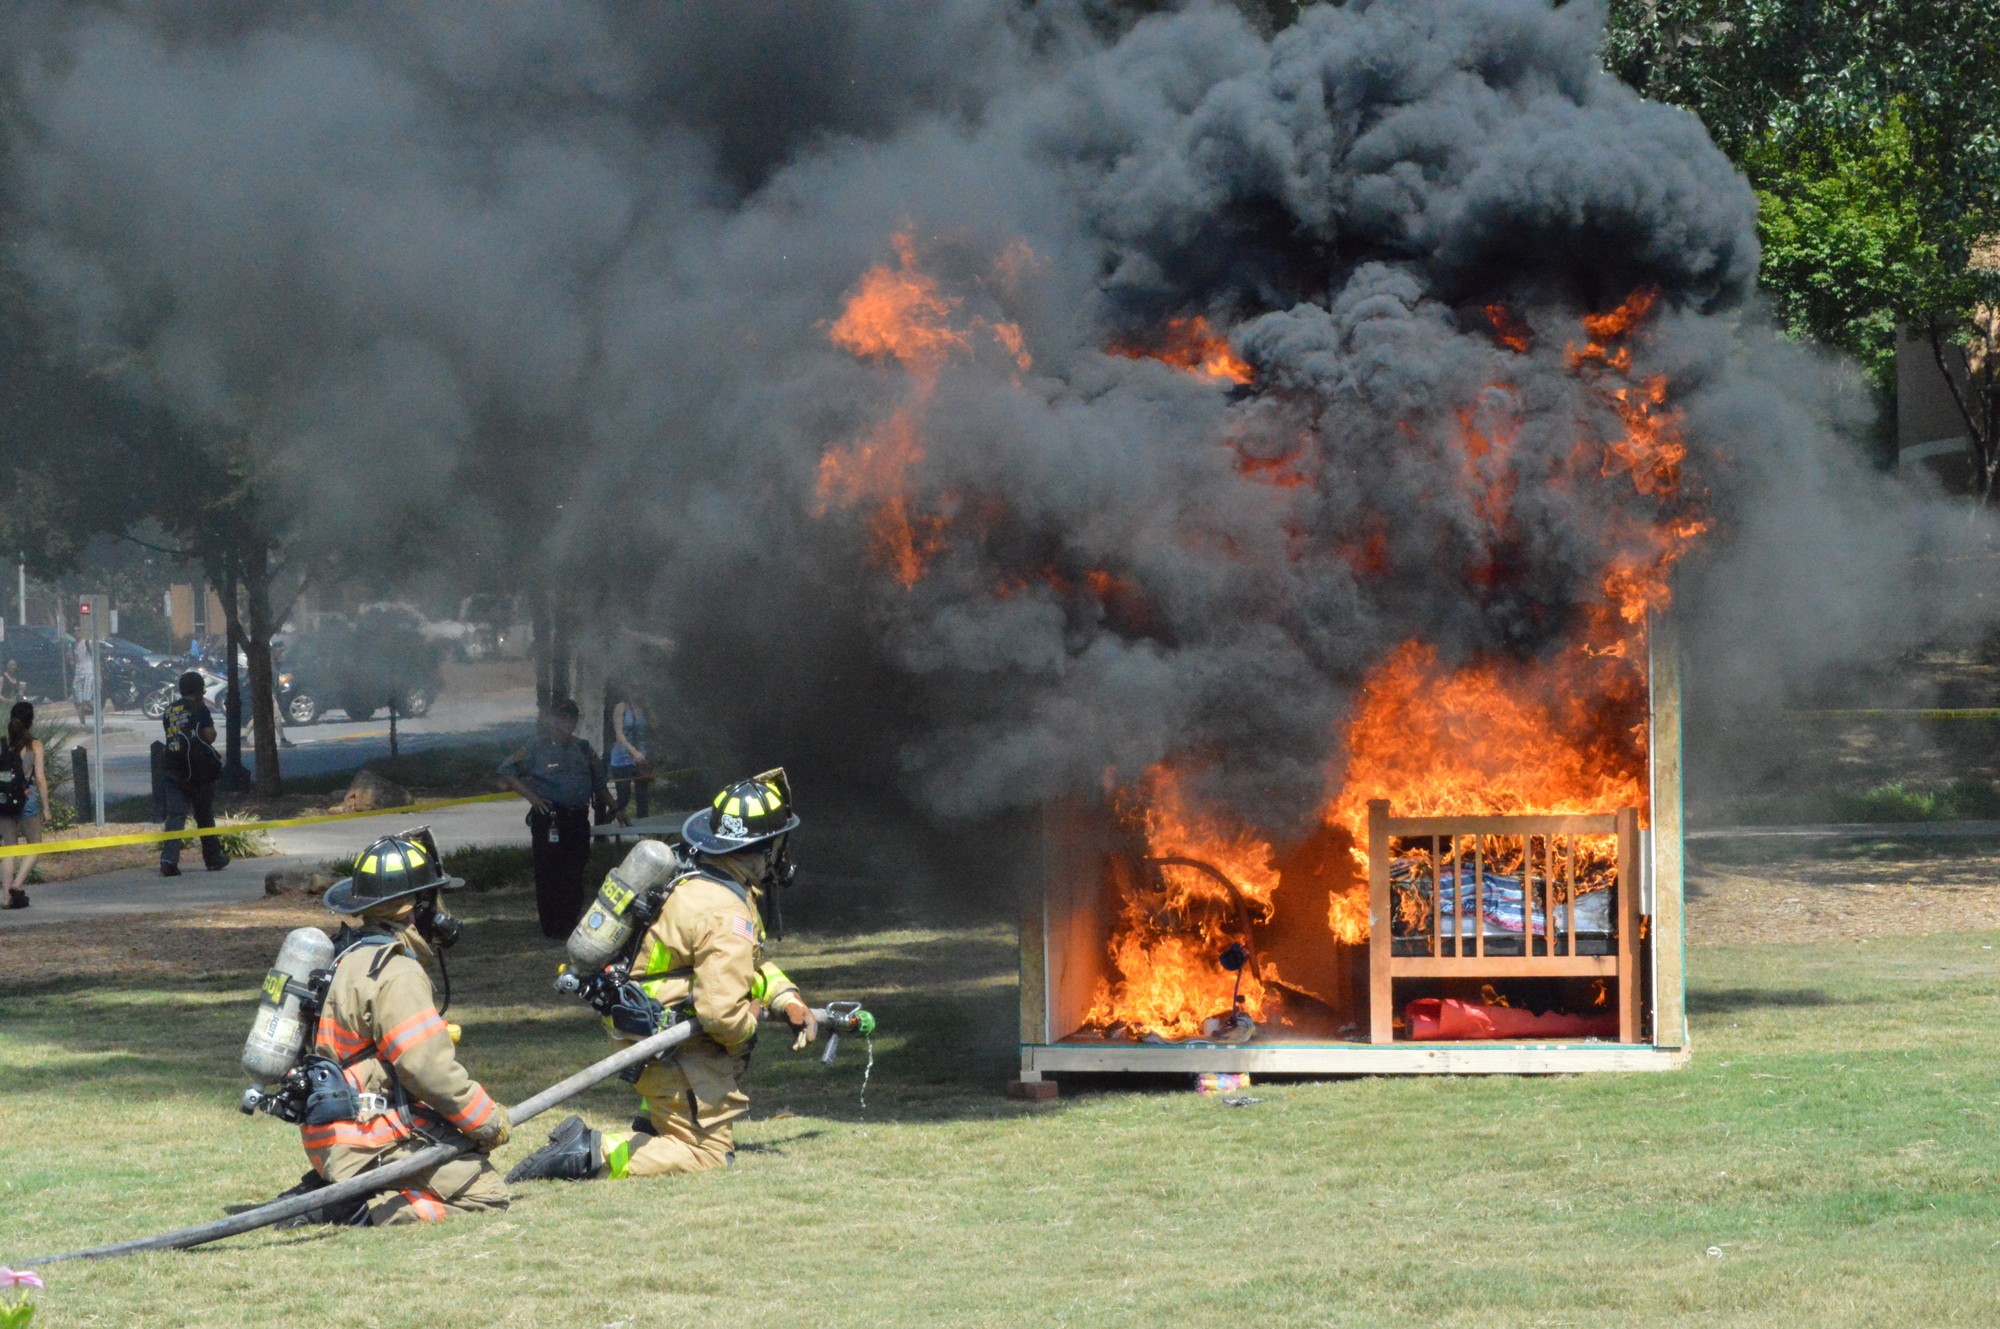 Dorm burn teaches students fire safety